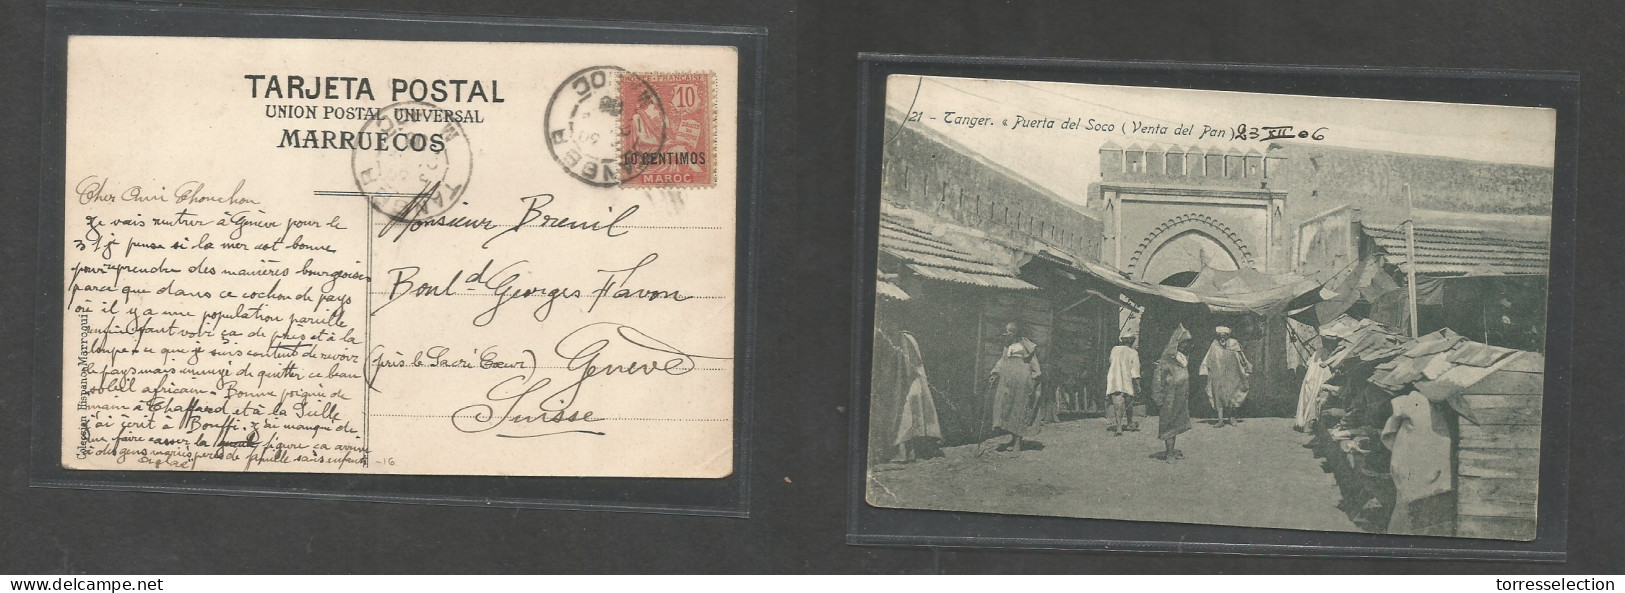 MARRUECOS - French. 1906. Tanger - Switzerland, Geneva. Fkd Ppc. Spanish Currency 10c Ovptd Red, Tied Cds. Fine. SALE. - Marokko (1956-...)